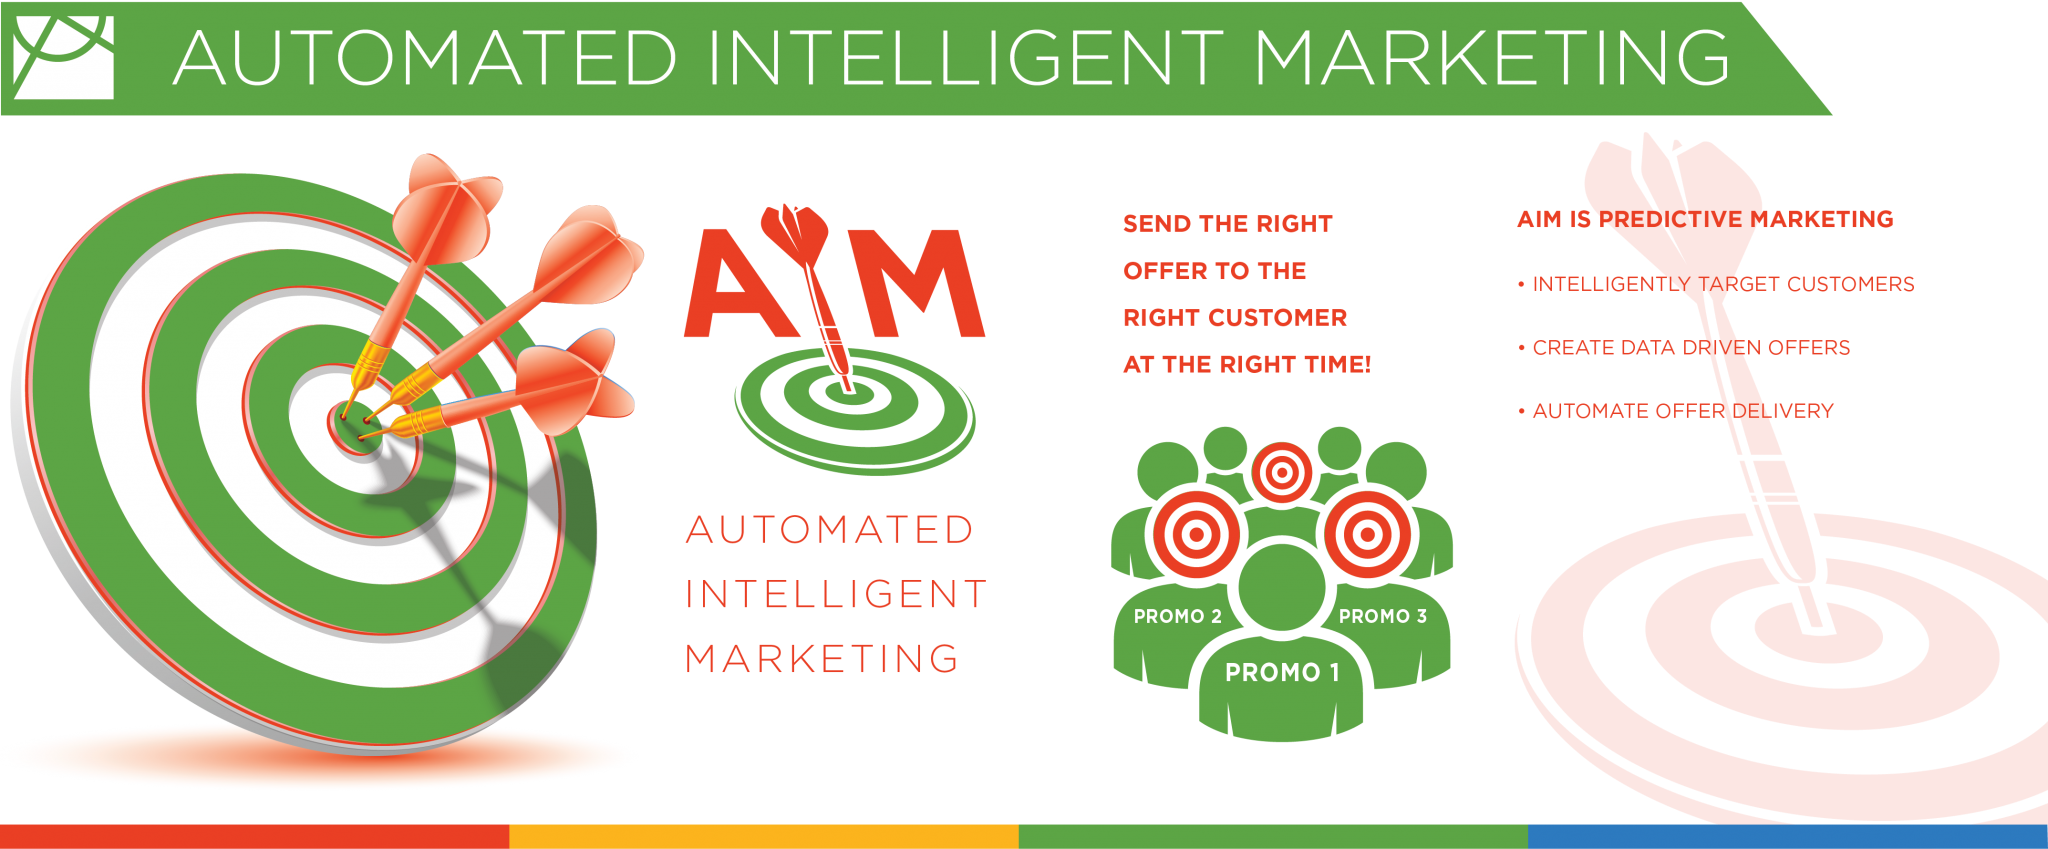 Automated Intelligent Marketing